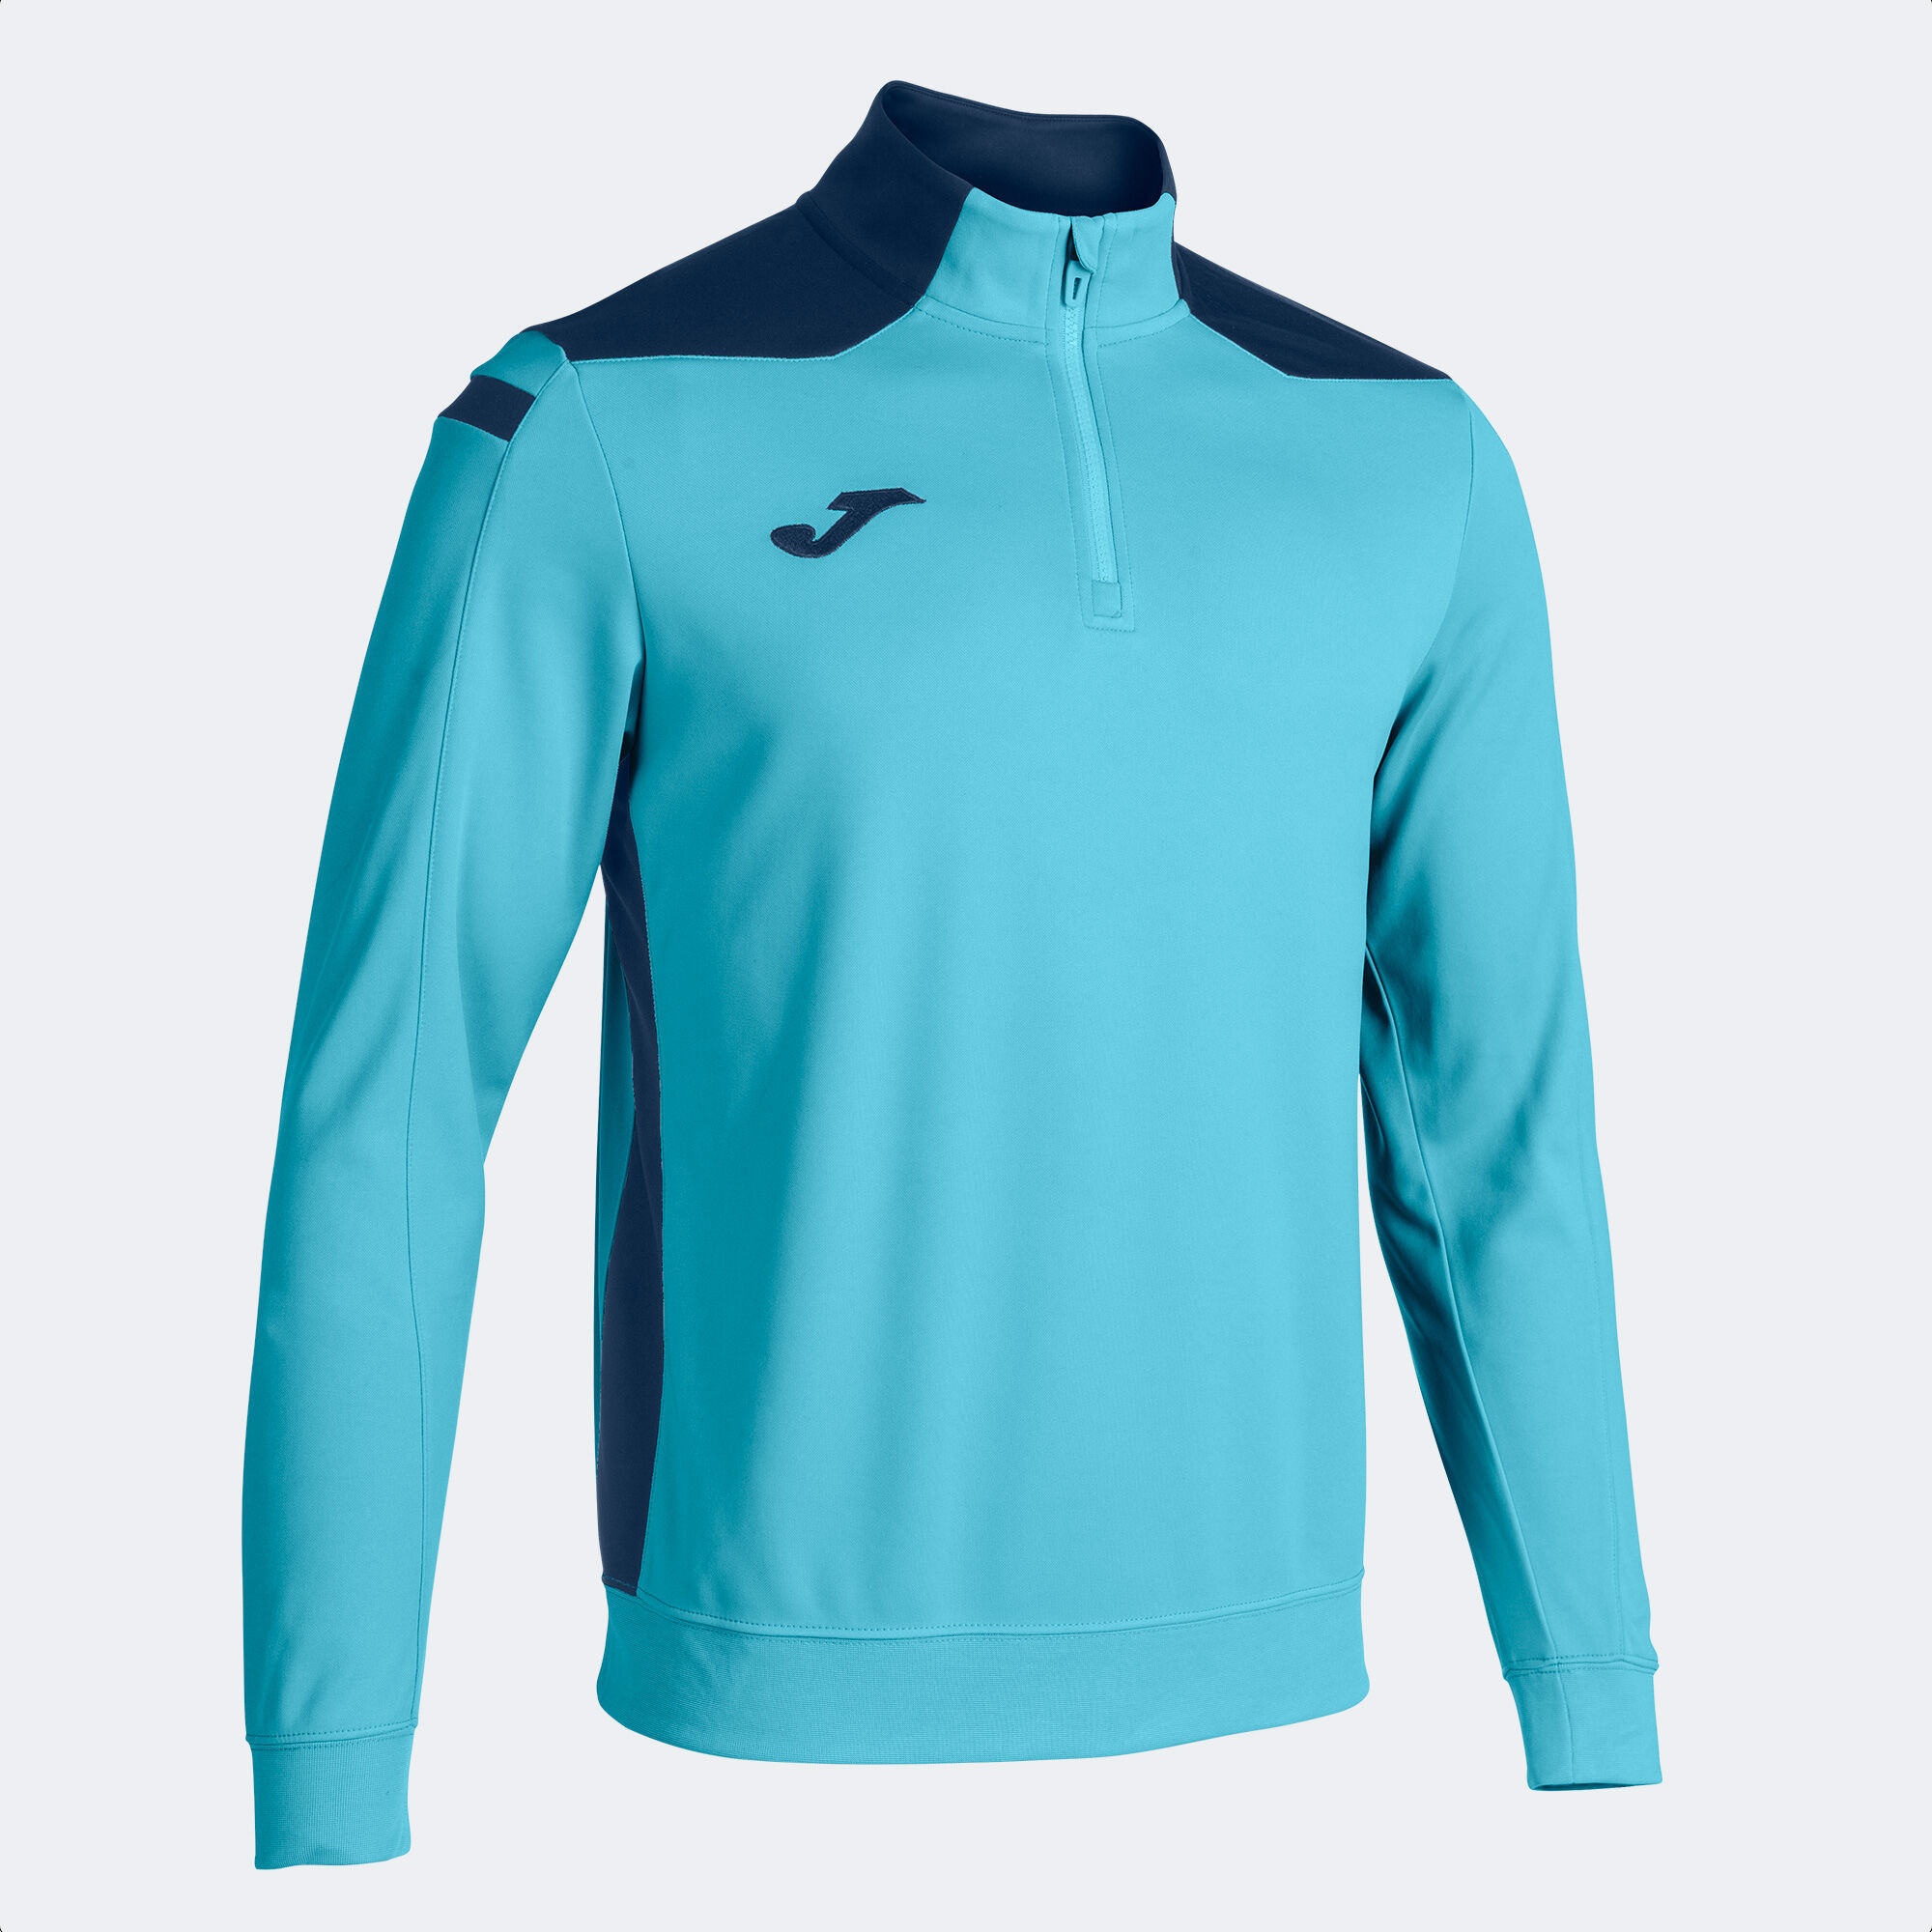 Sweat-shirt homme Championship VI turquoise fluo bleu marine